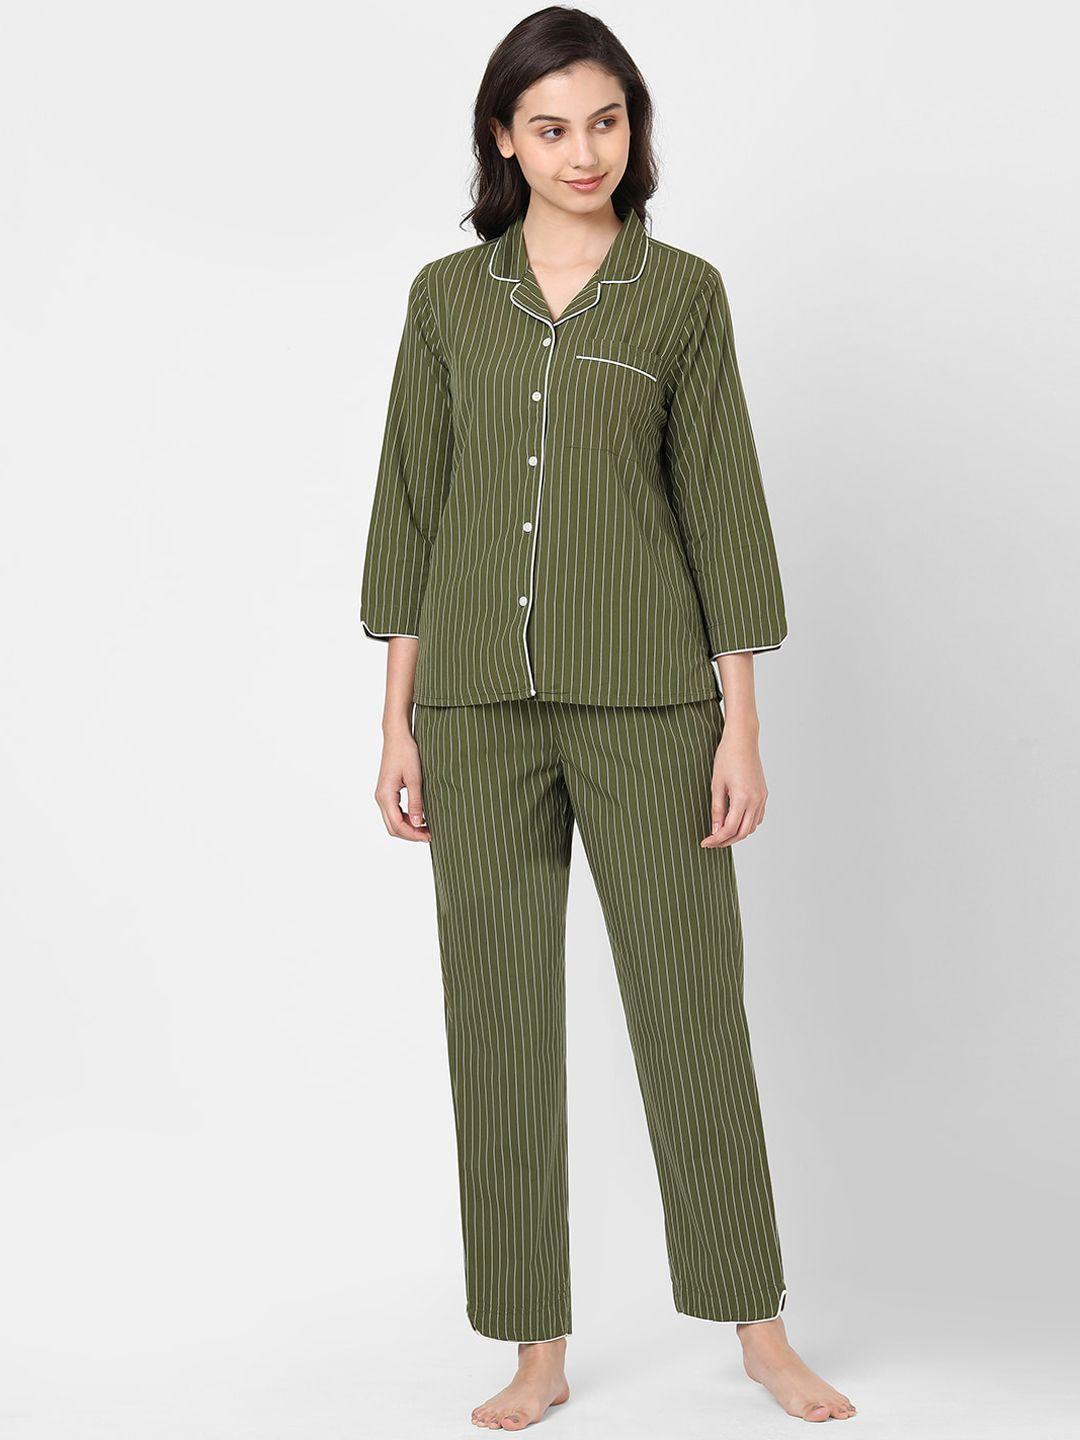 mystere-paris-women-olive-green-&-white-striped--pure-cotton-night-suit